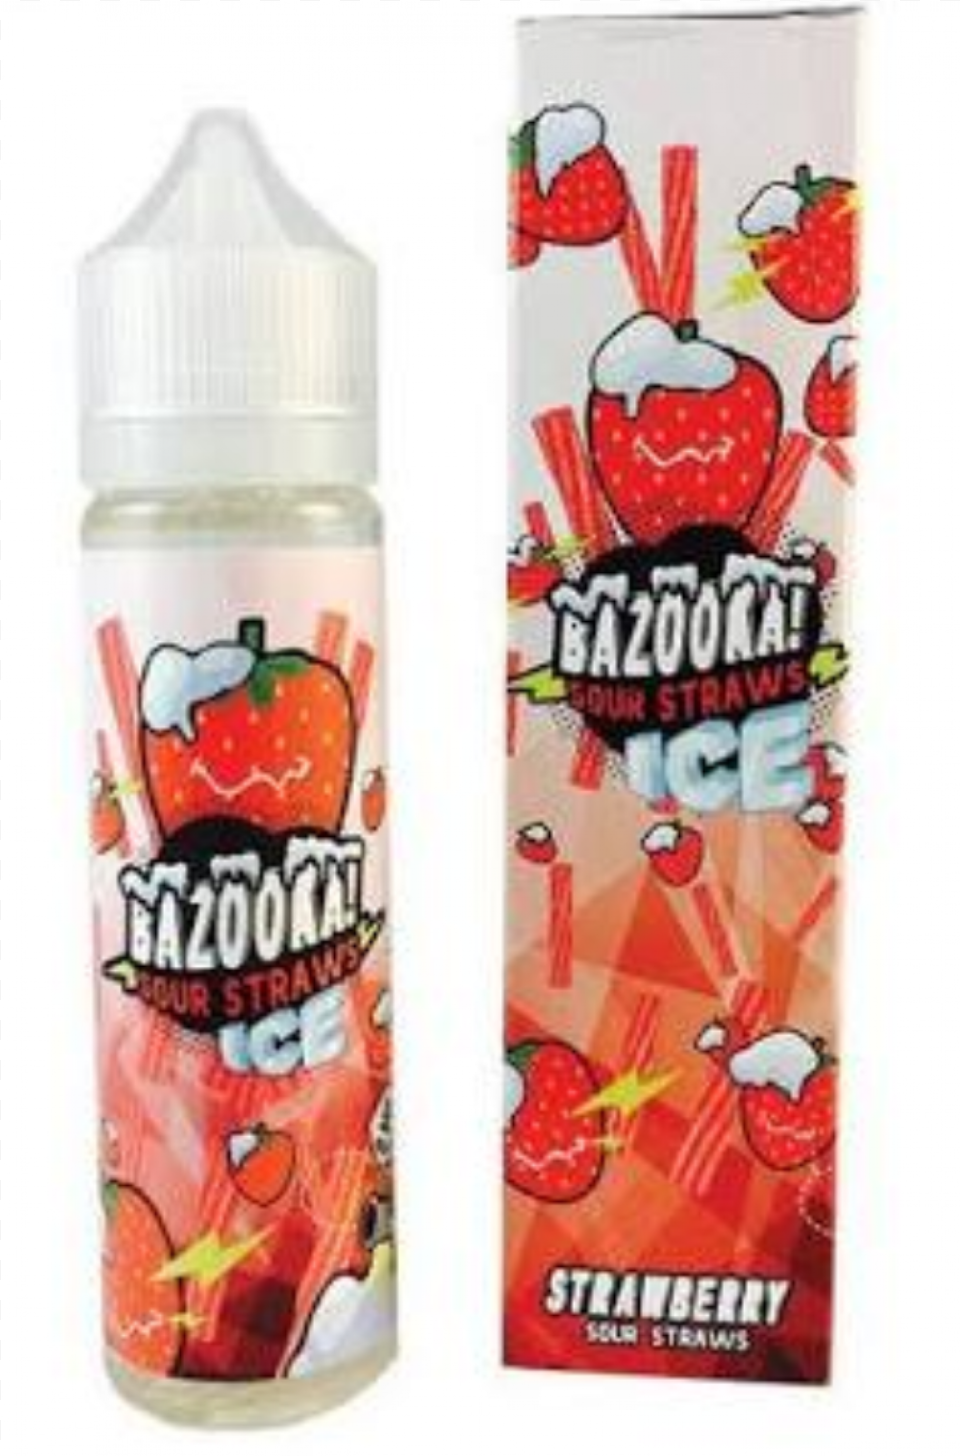 Prev Bazooka Sour Straws Strawberry Ice, Bottle, Shaker, Dynamite, Weapon Png Image